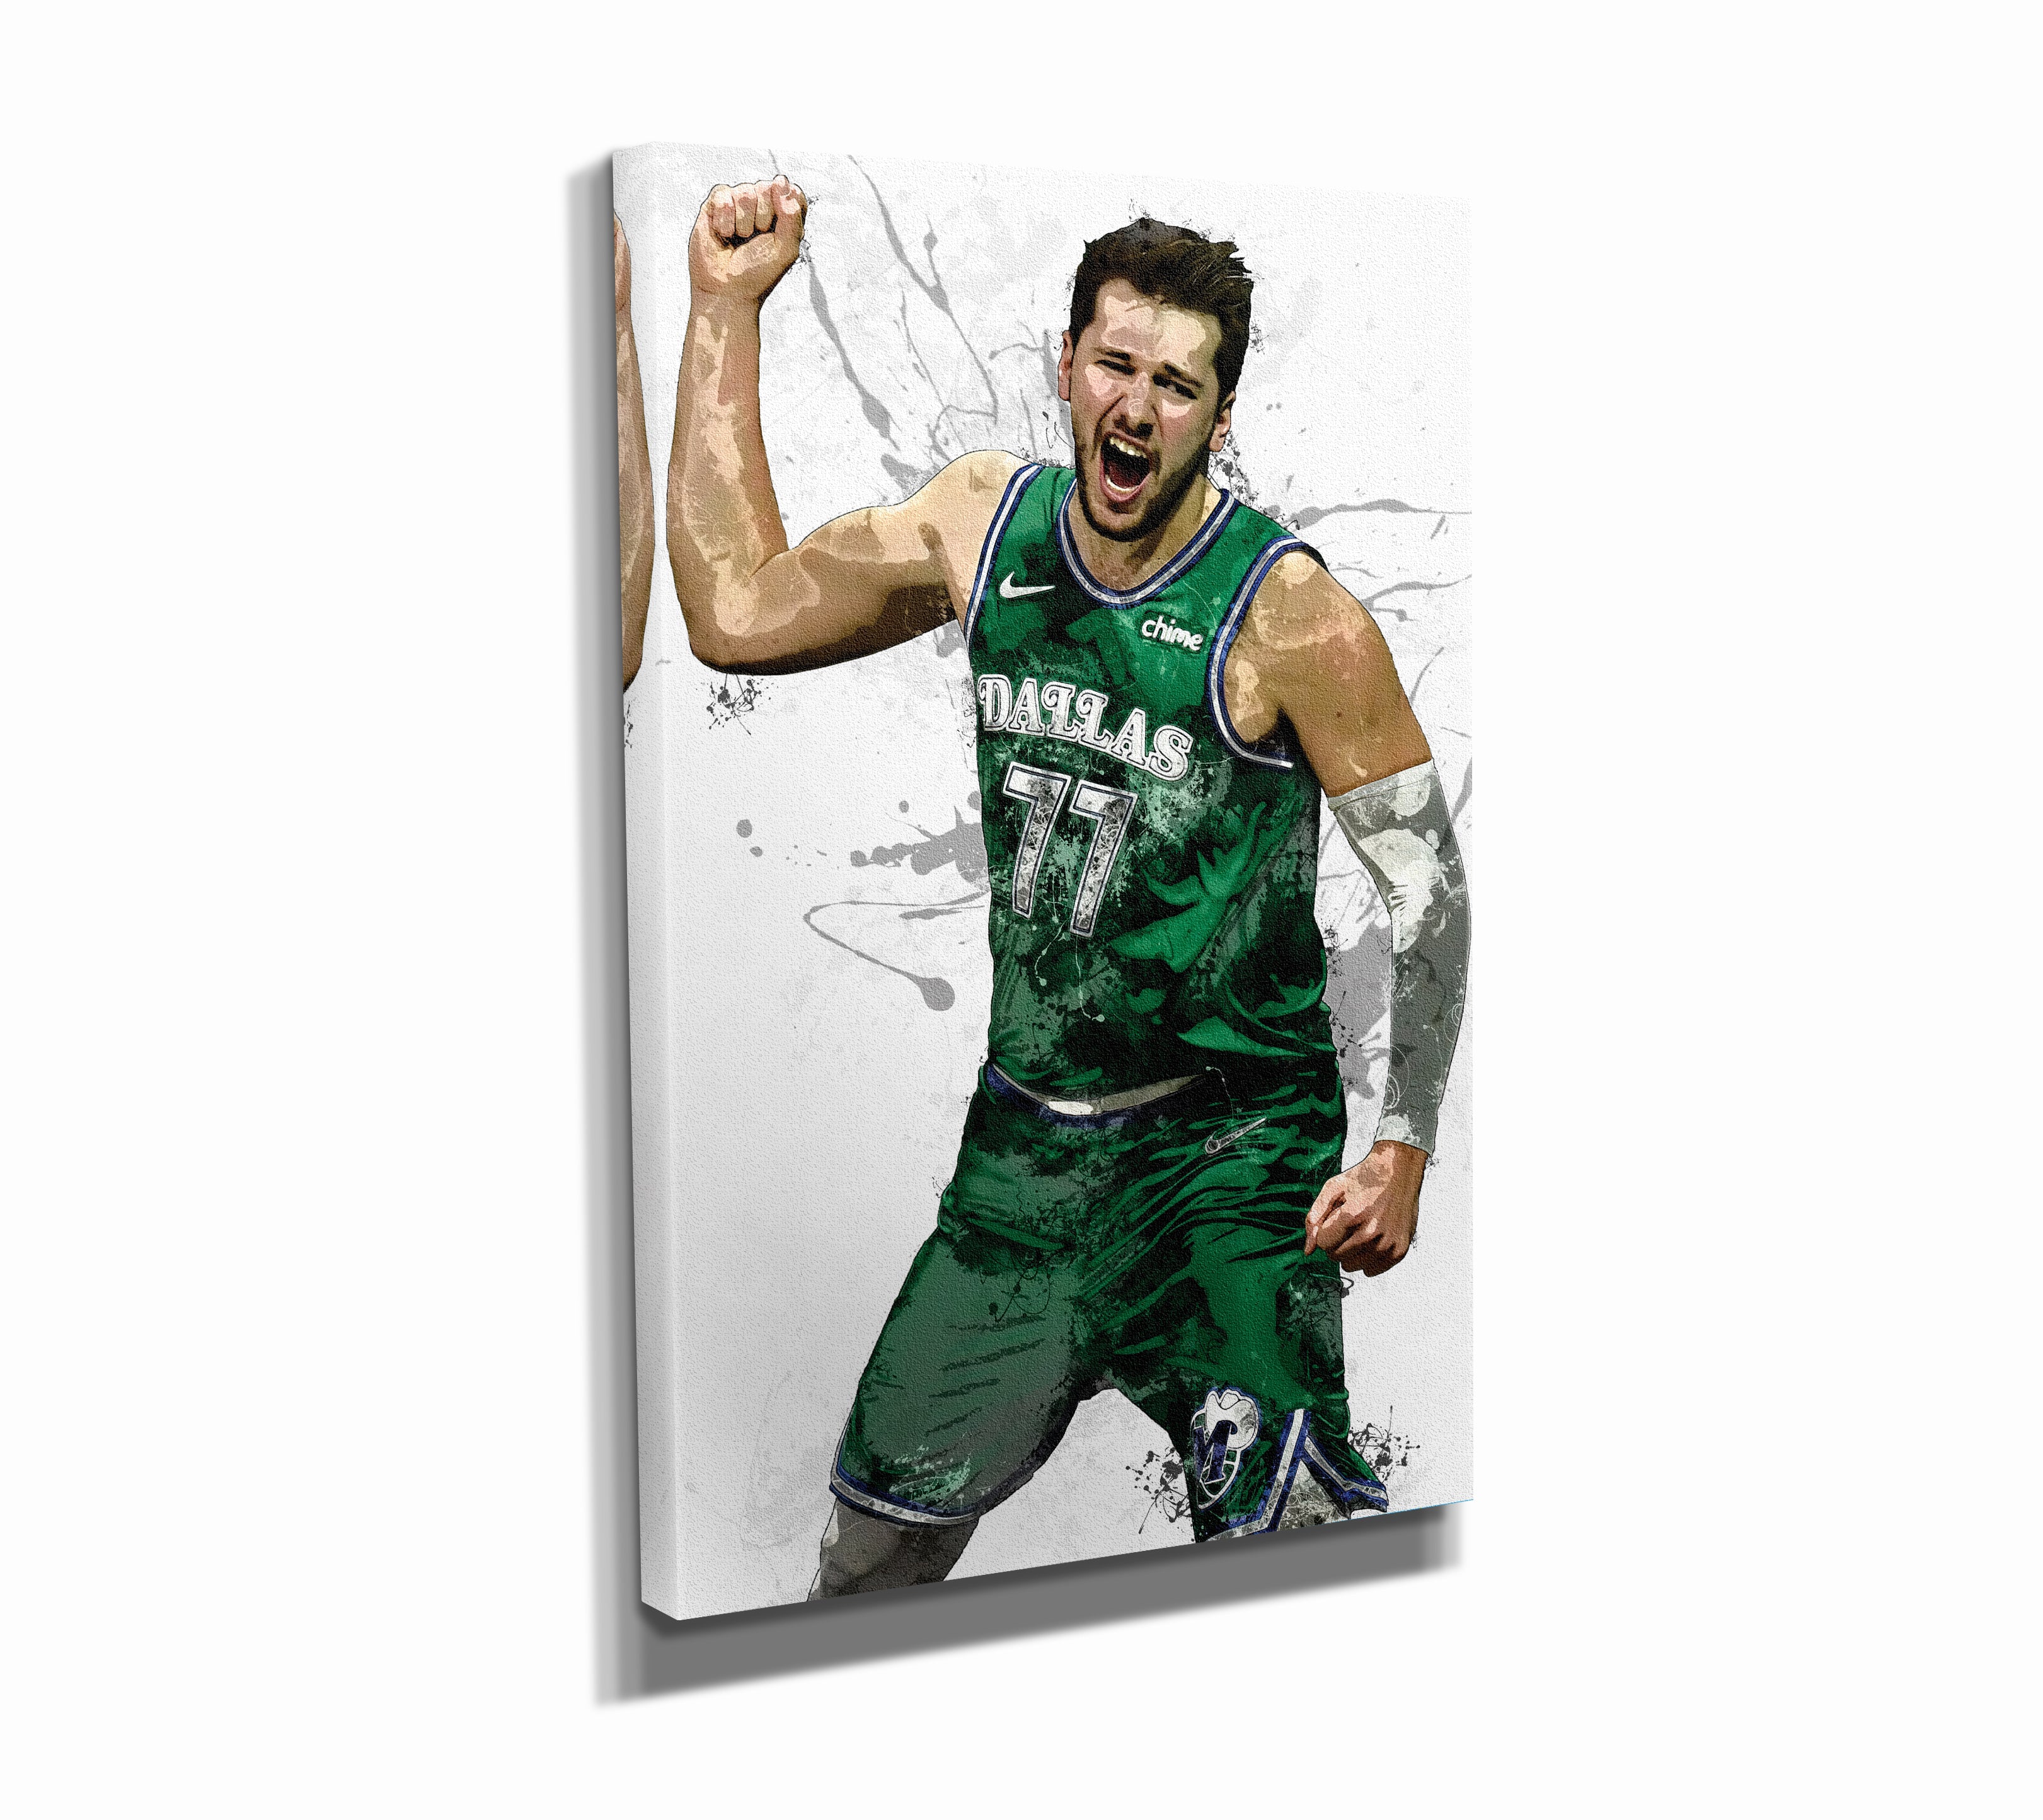  MW MERWEZI Luka Doncic Jersey Art Dallas Mavericks NBA Wall Art  Home Decor Hand Made Poster Canvas Print(Black Floating Frame, 12x18):  Posters & Prints